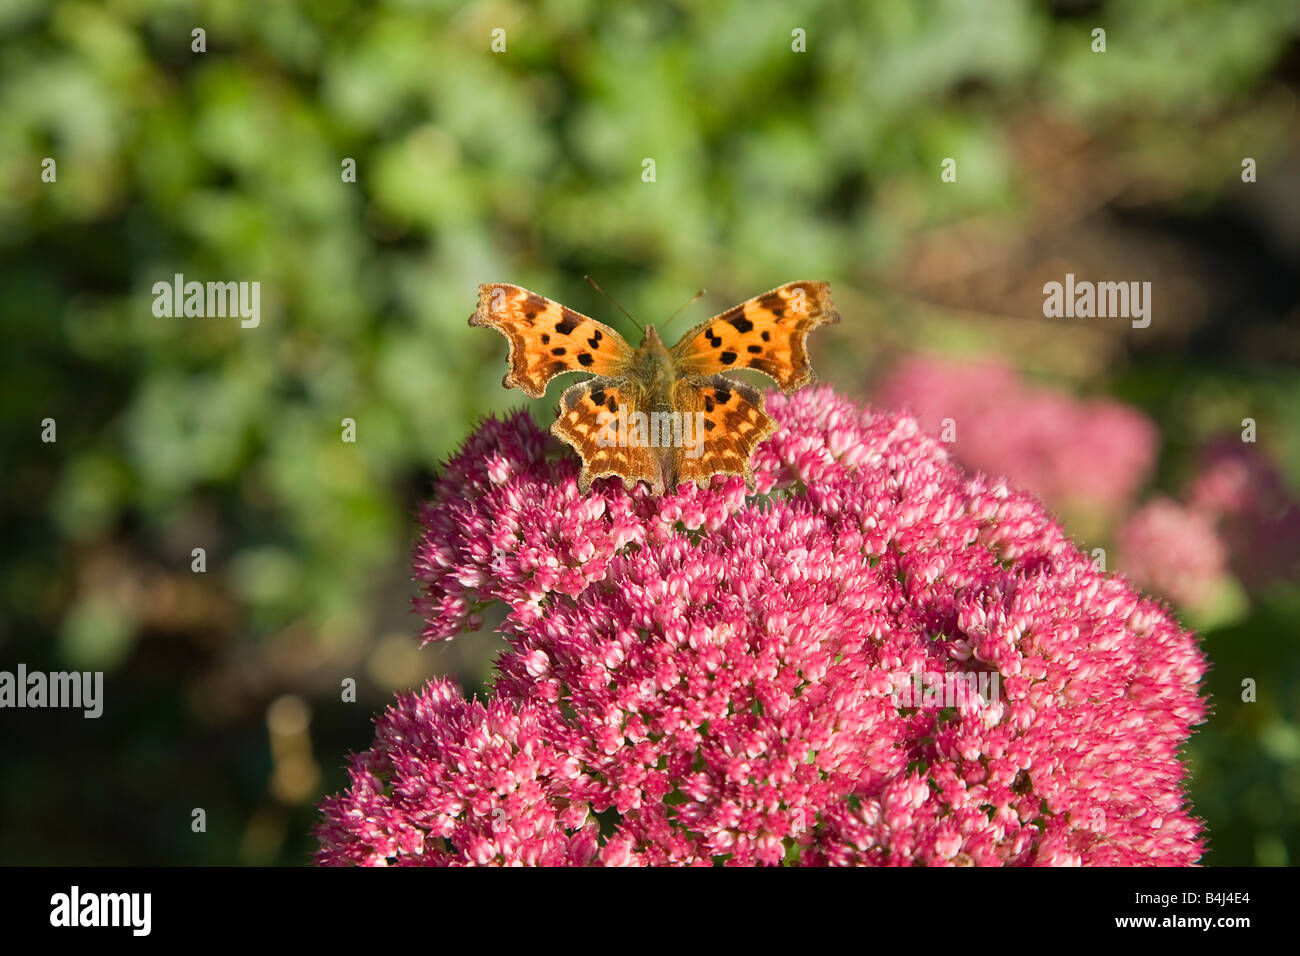 Comma butterfly on Sedum flower Stock Photo